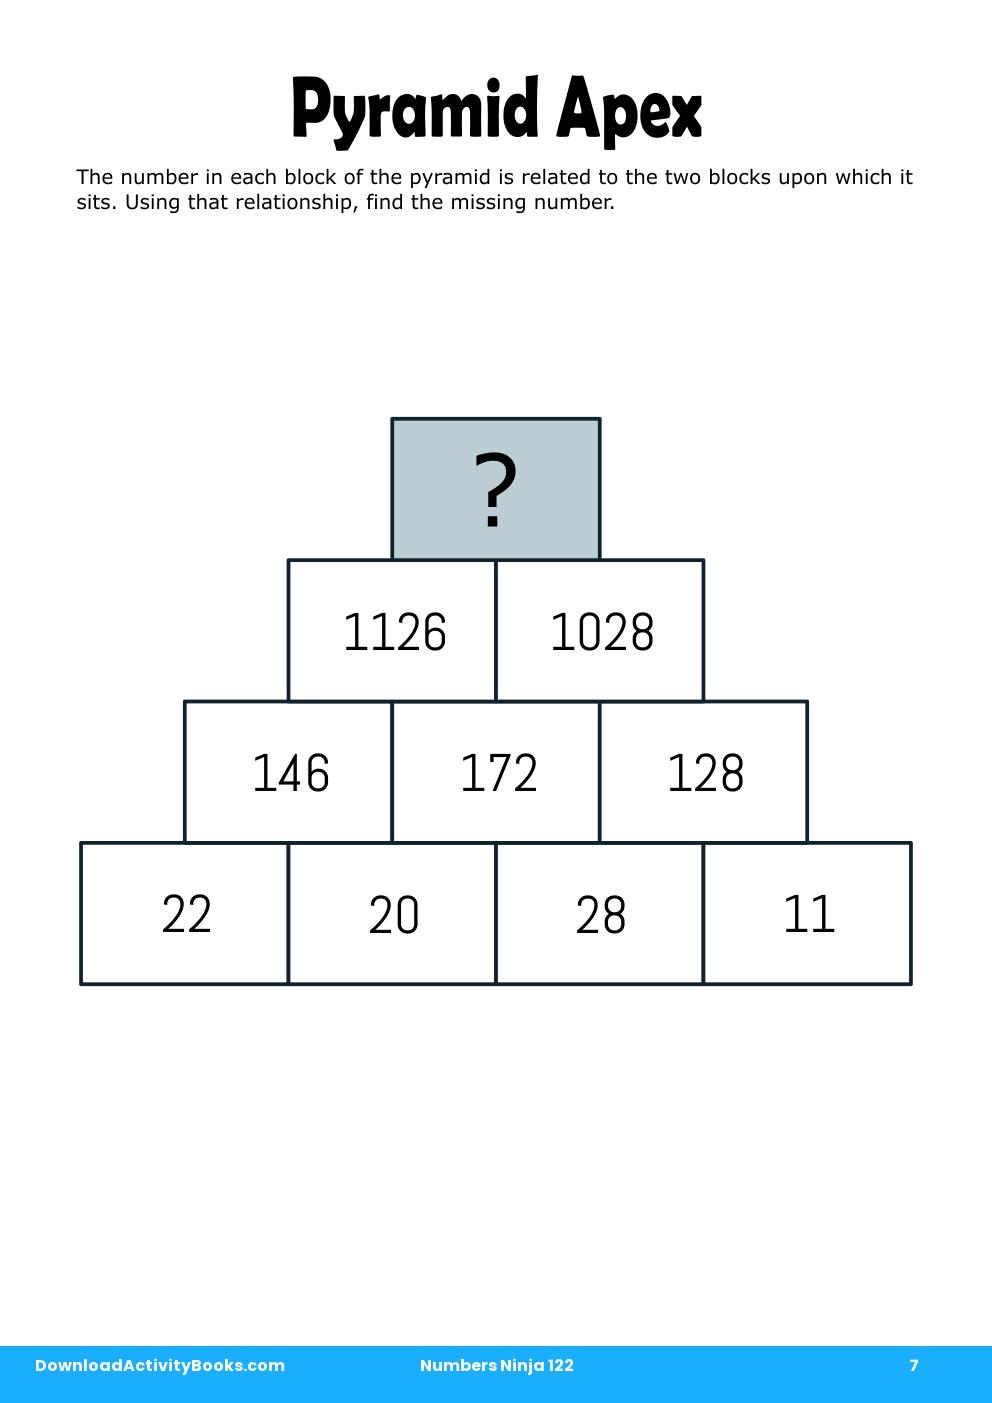 Pyramid Apex in Numbers Ninja 122